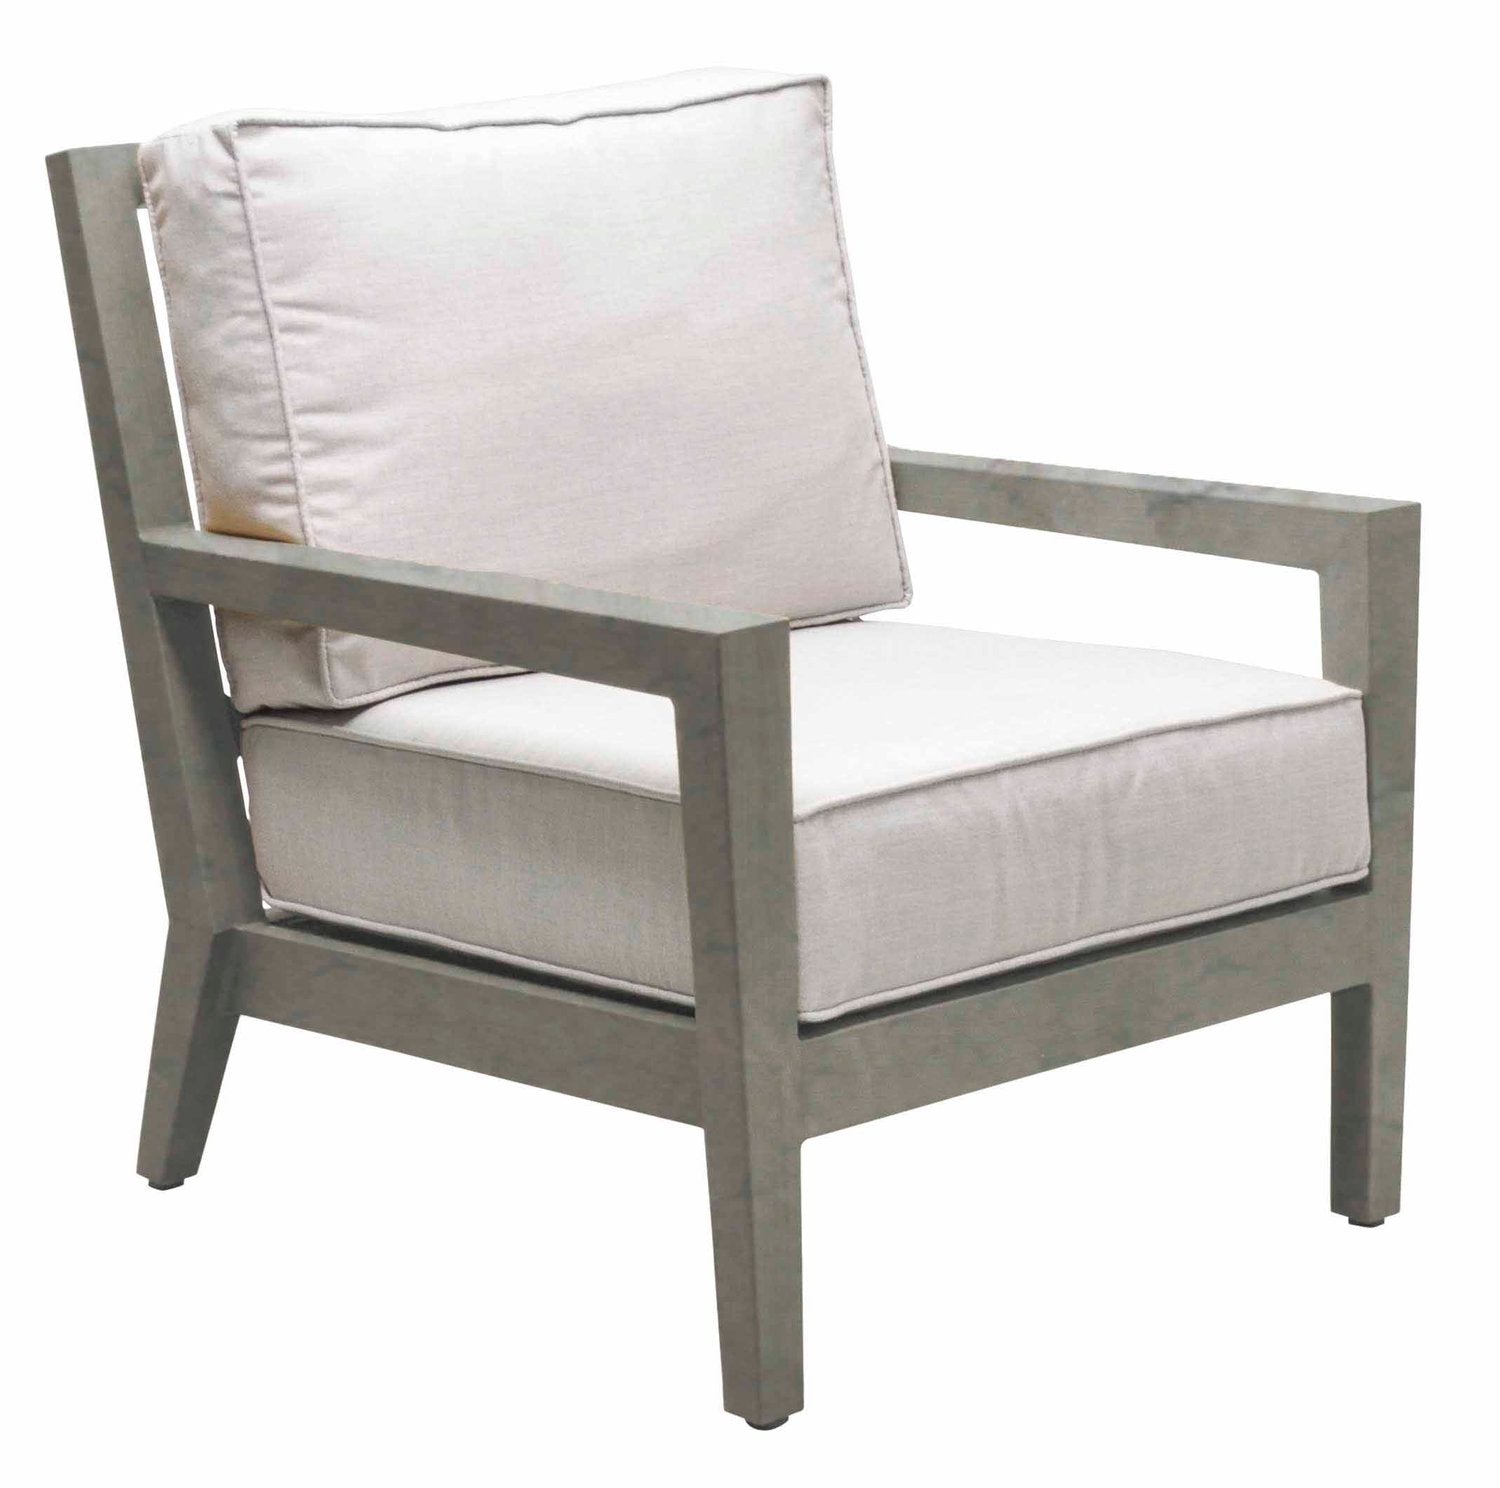 Aspen Lounge Chair By Patio Renassaince